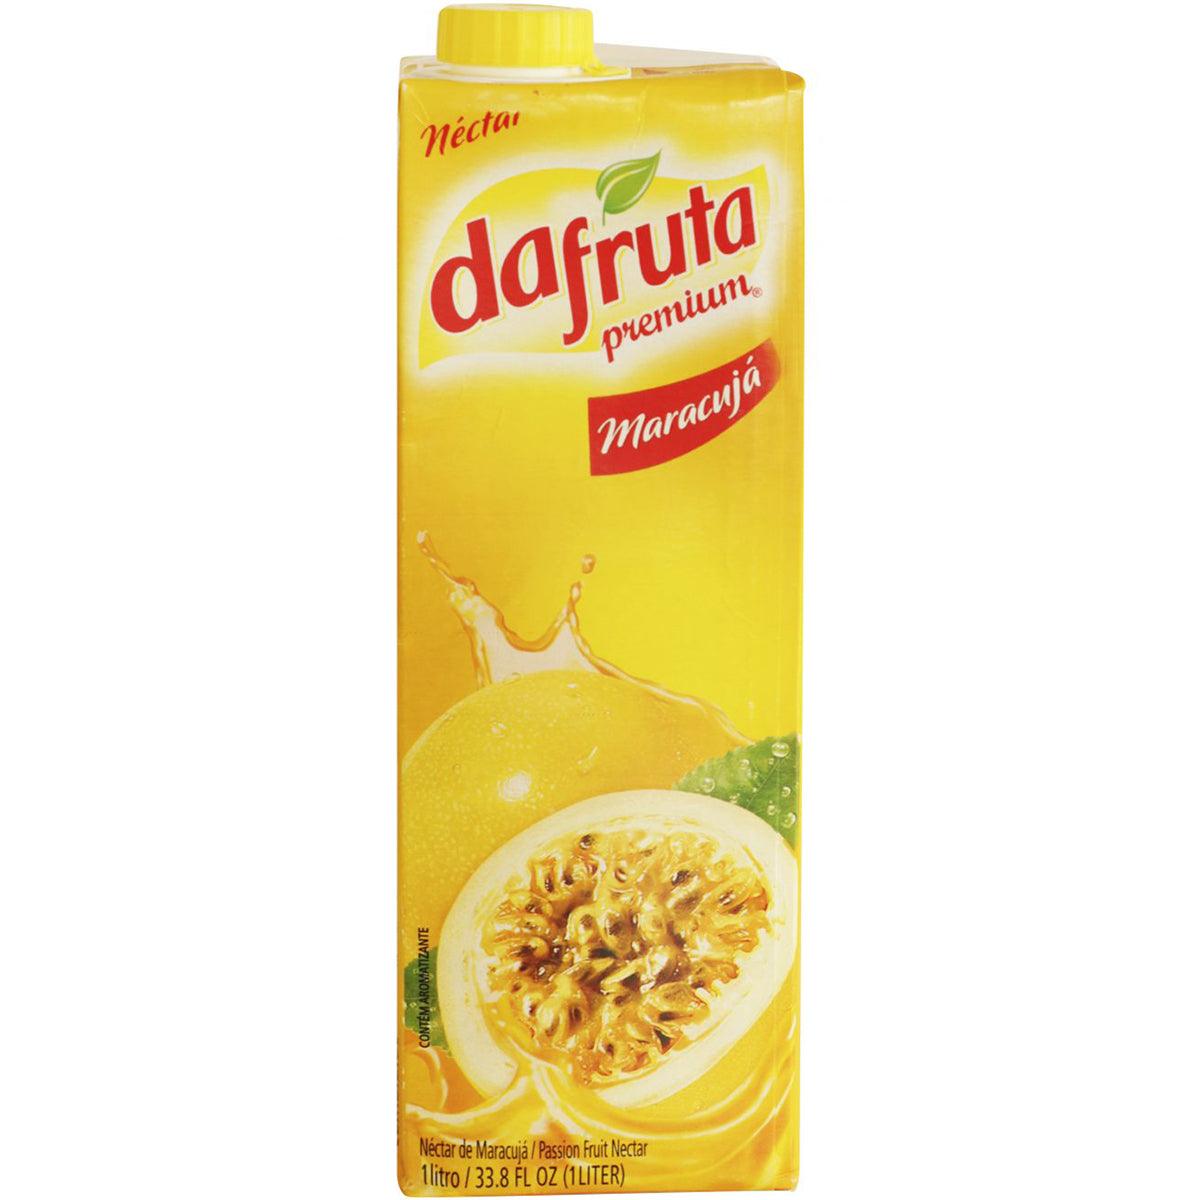 DaFruta RTD Maracuja Nectar 1l